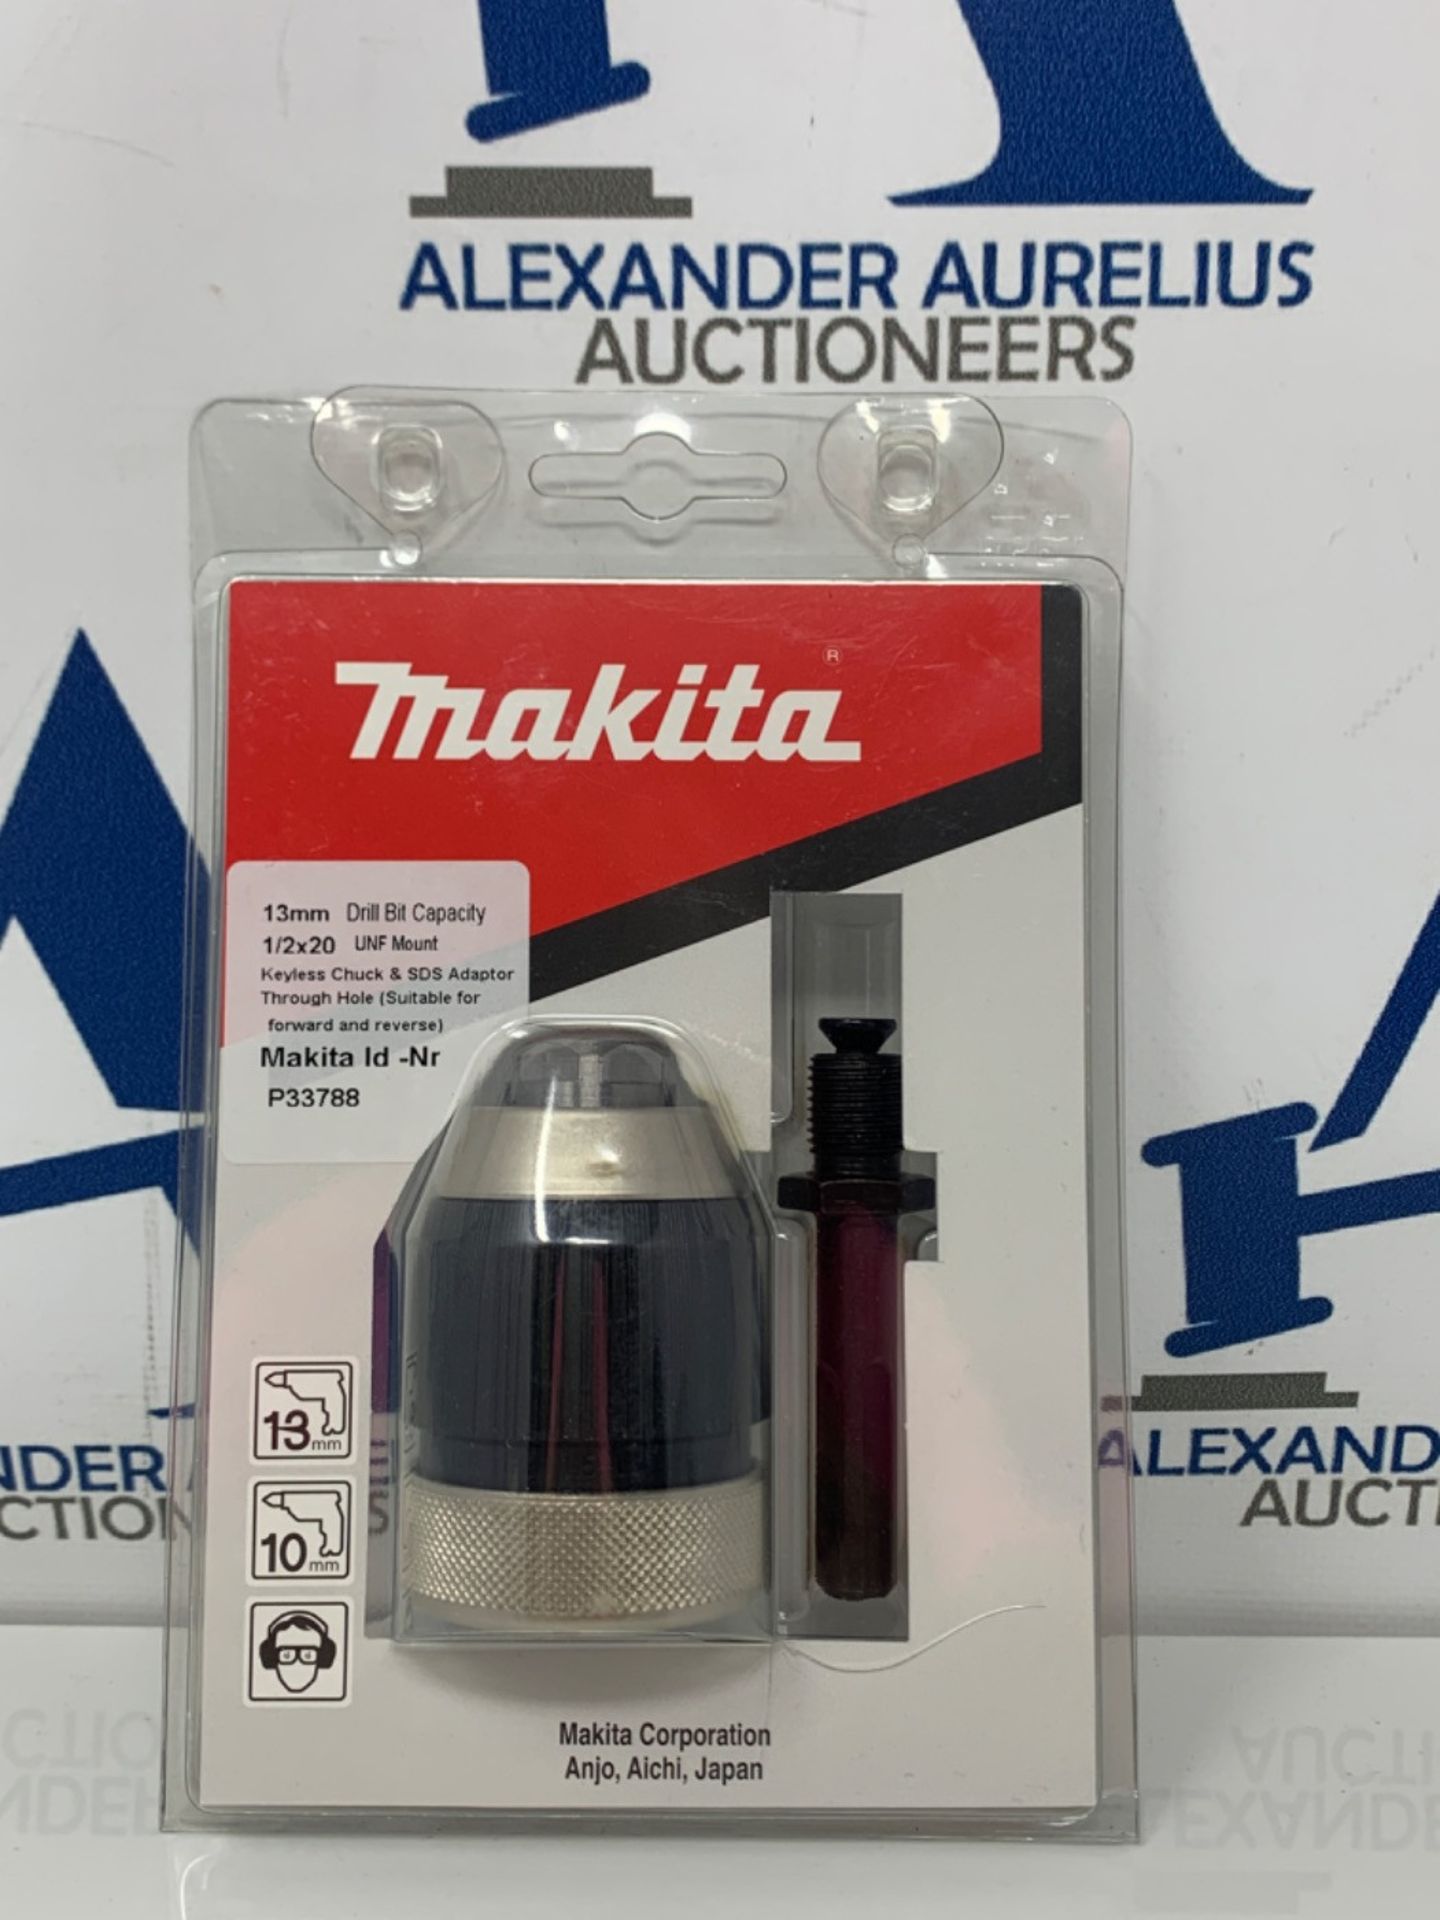 Makita P-33788 Keyless Chuck & SDS-Plus Adapter